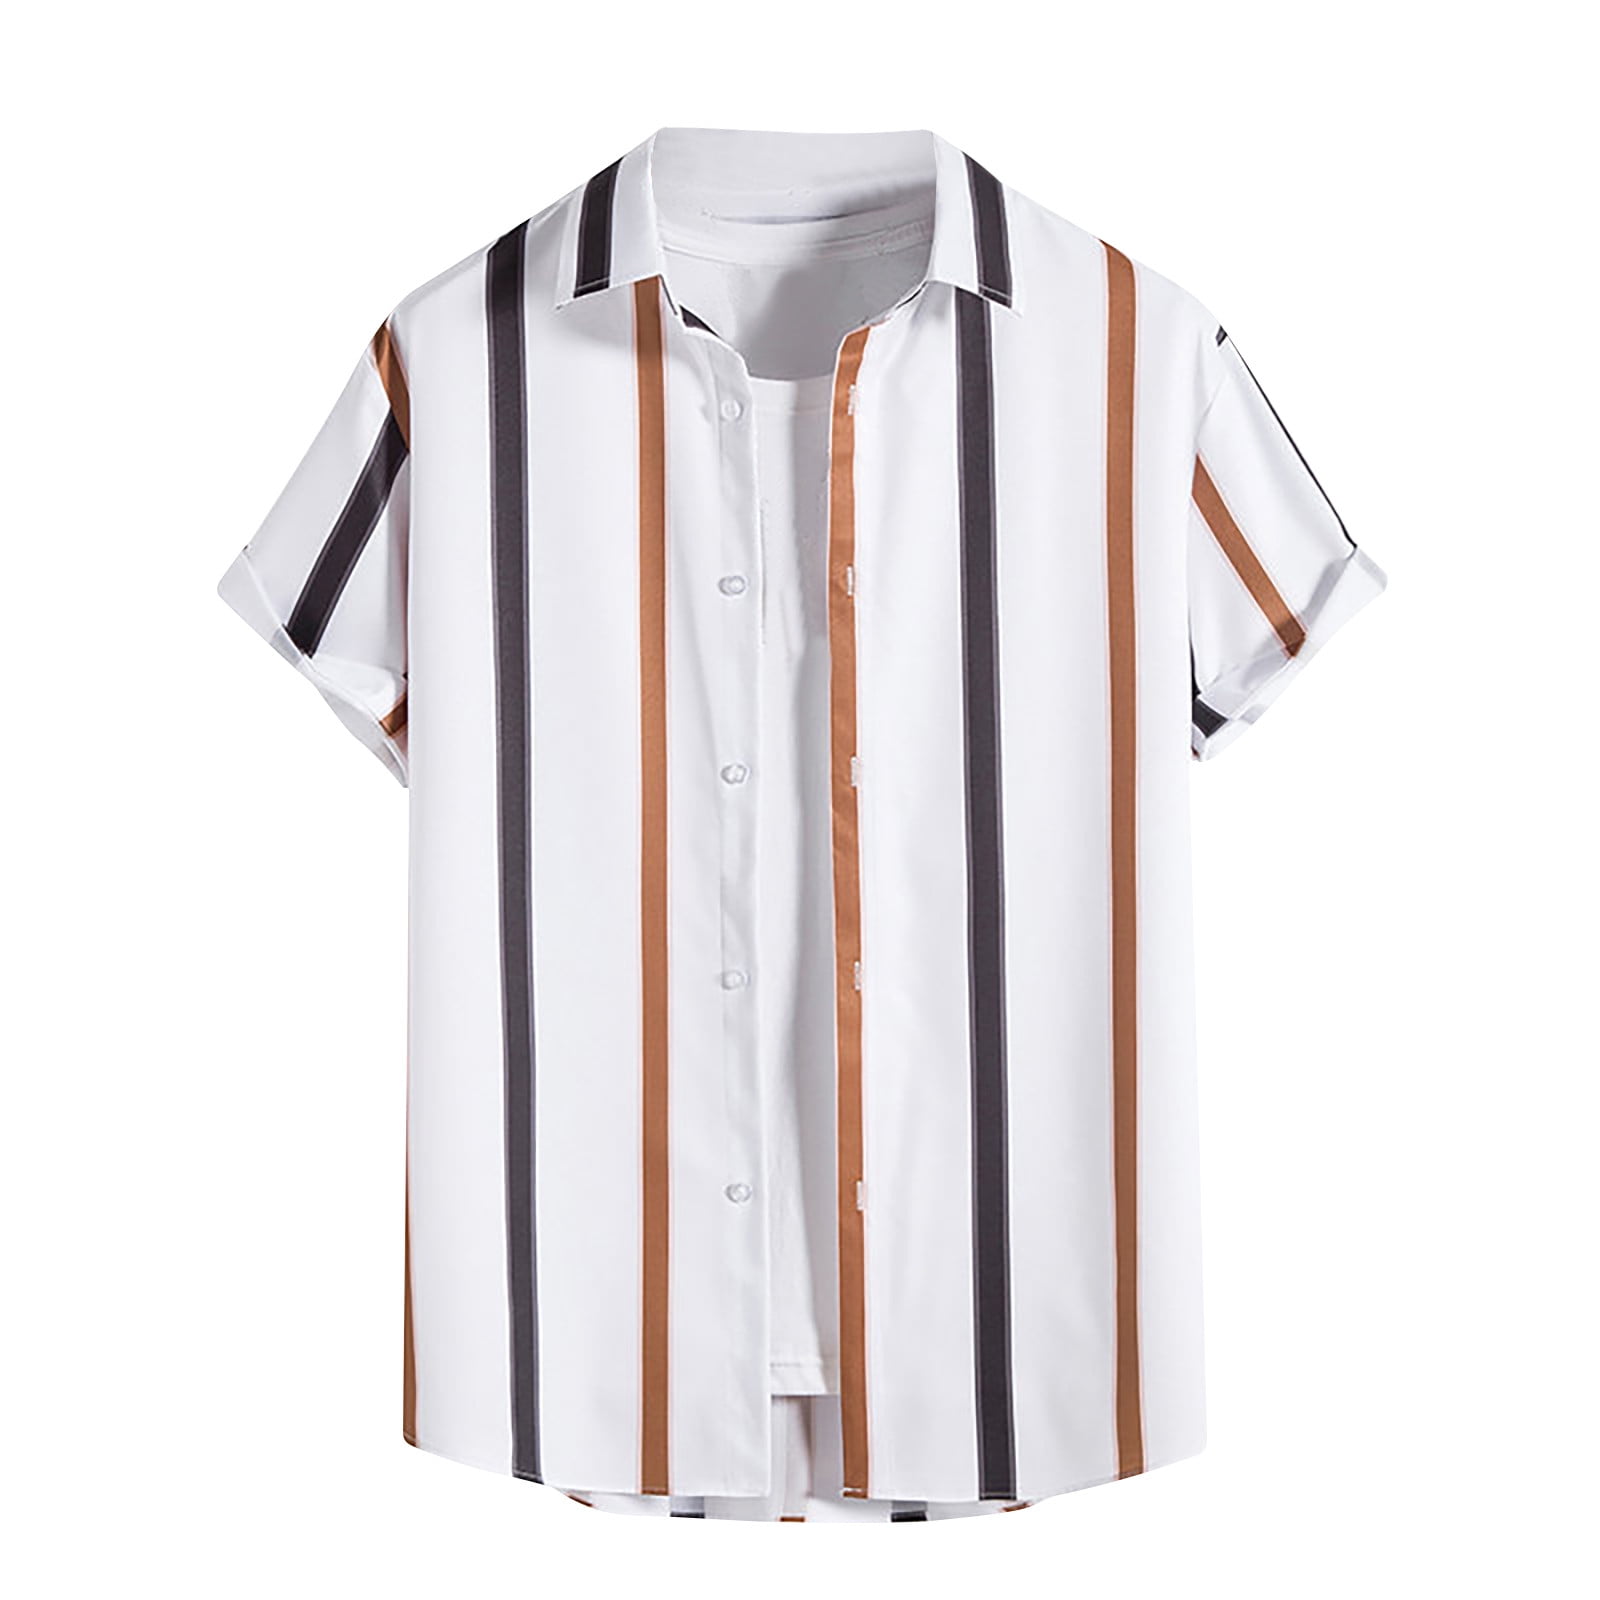 APEXFWDT Men's Casual Striped Shirts Short Sleeve Button Down Shirt ...